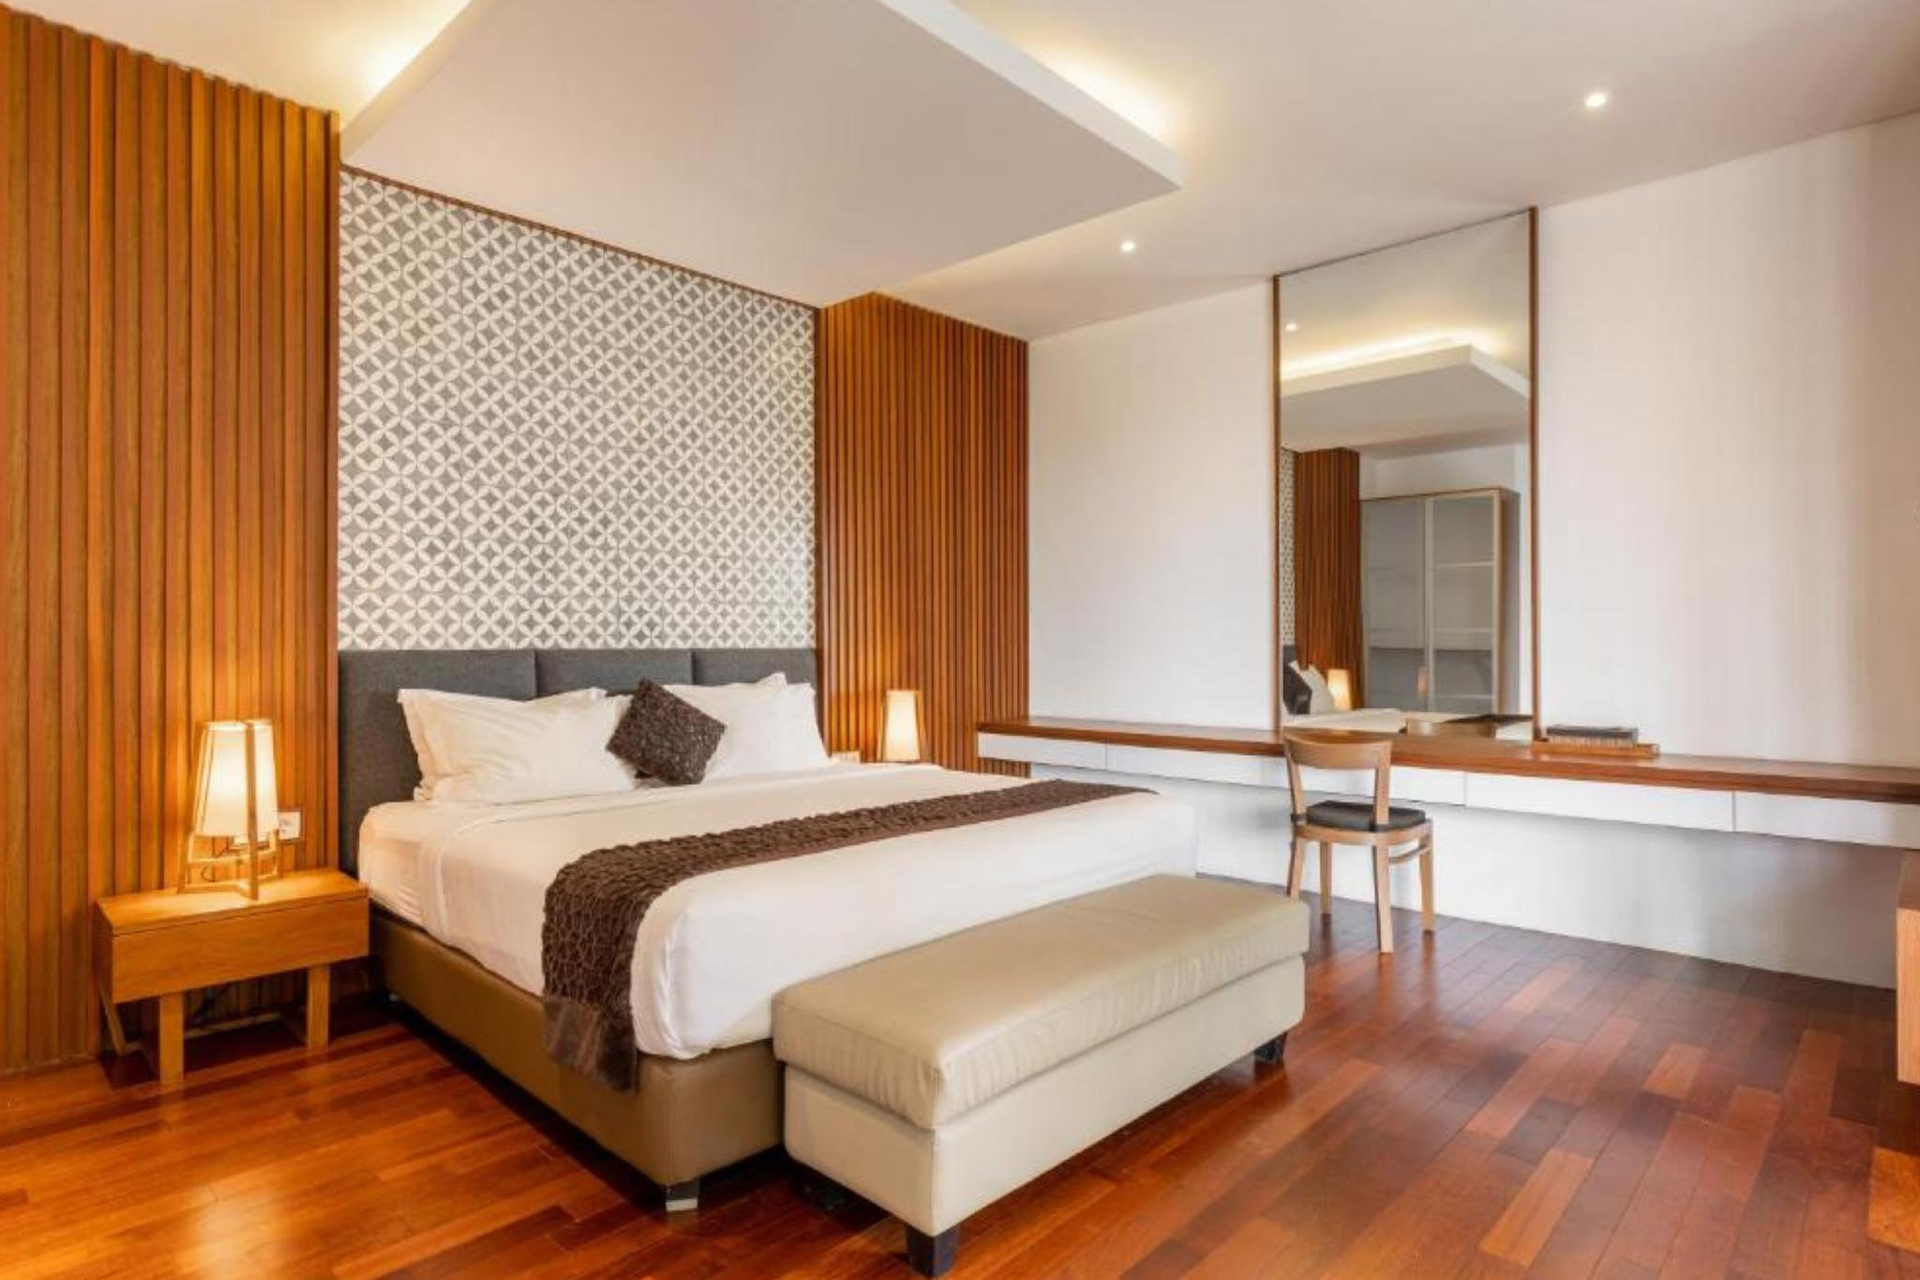 Bedroom 2, Luxury 4 BR Private Pool Villa #Z241, Badung